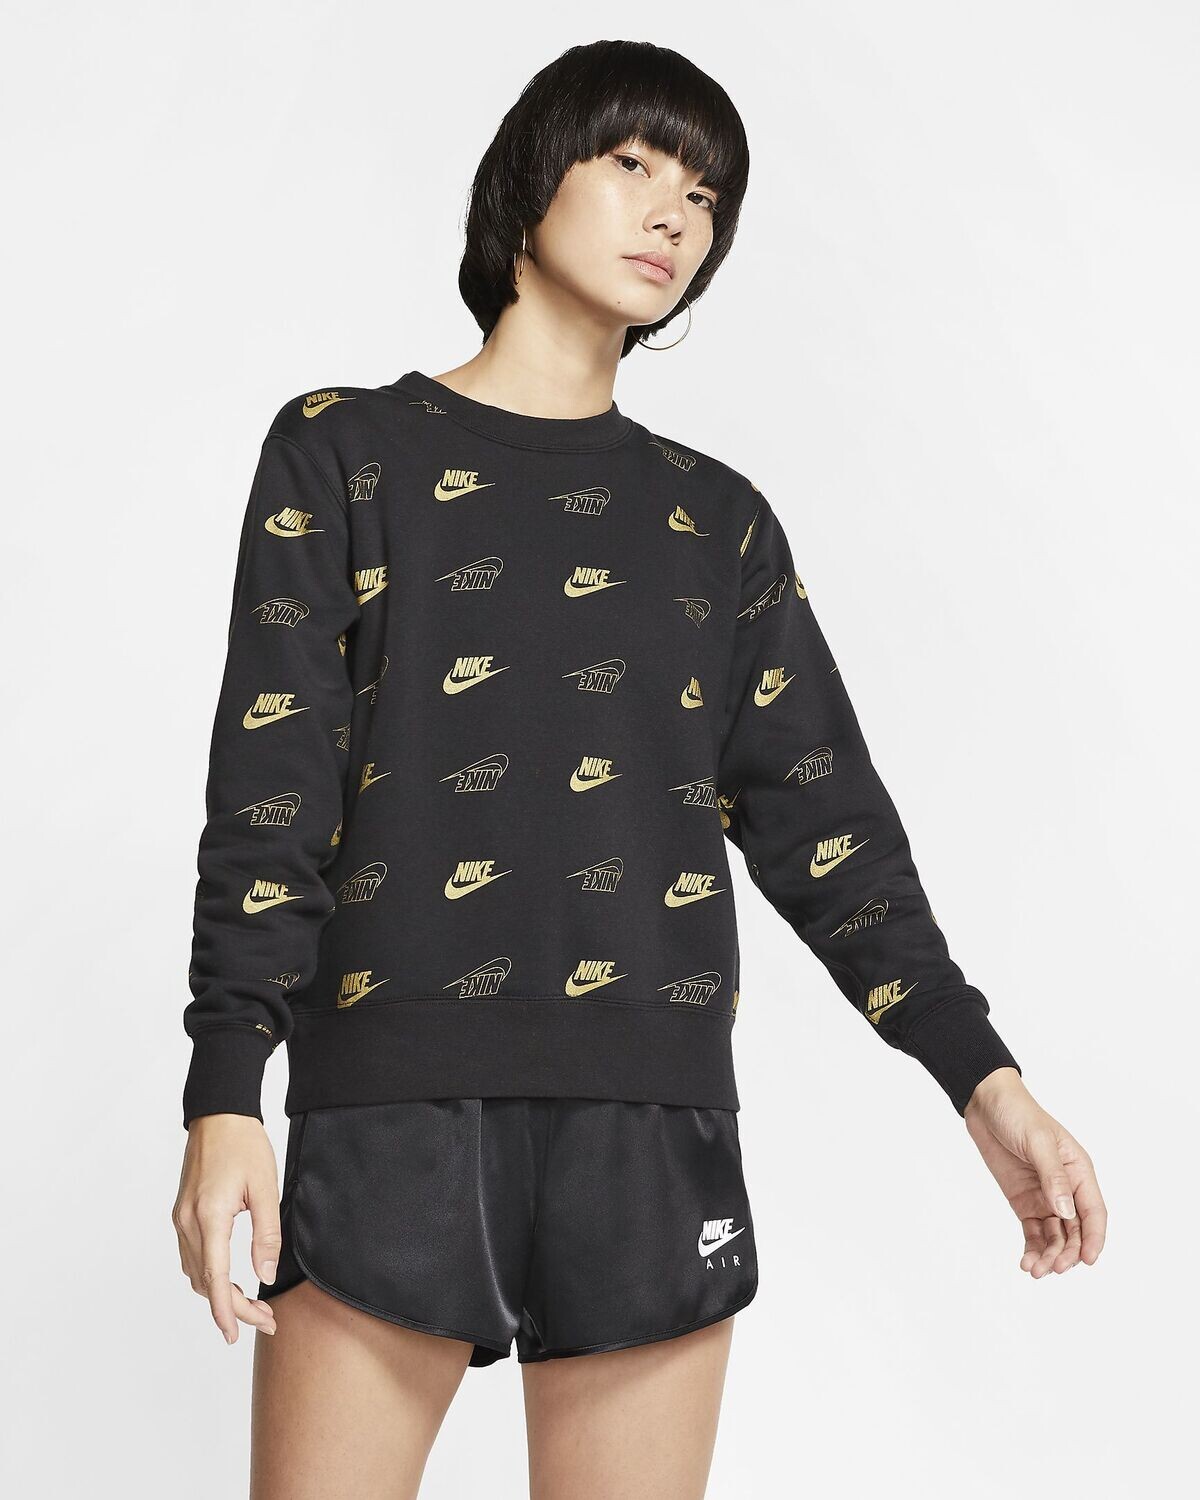 Felpa Nike a girocollo nera multi logo oro donna art. BV4994 010